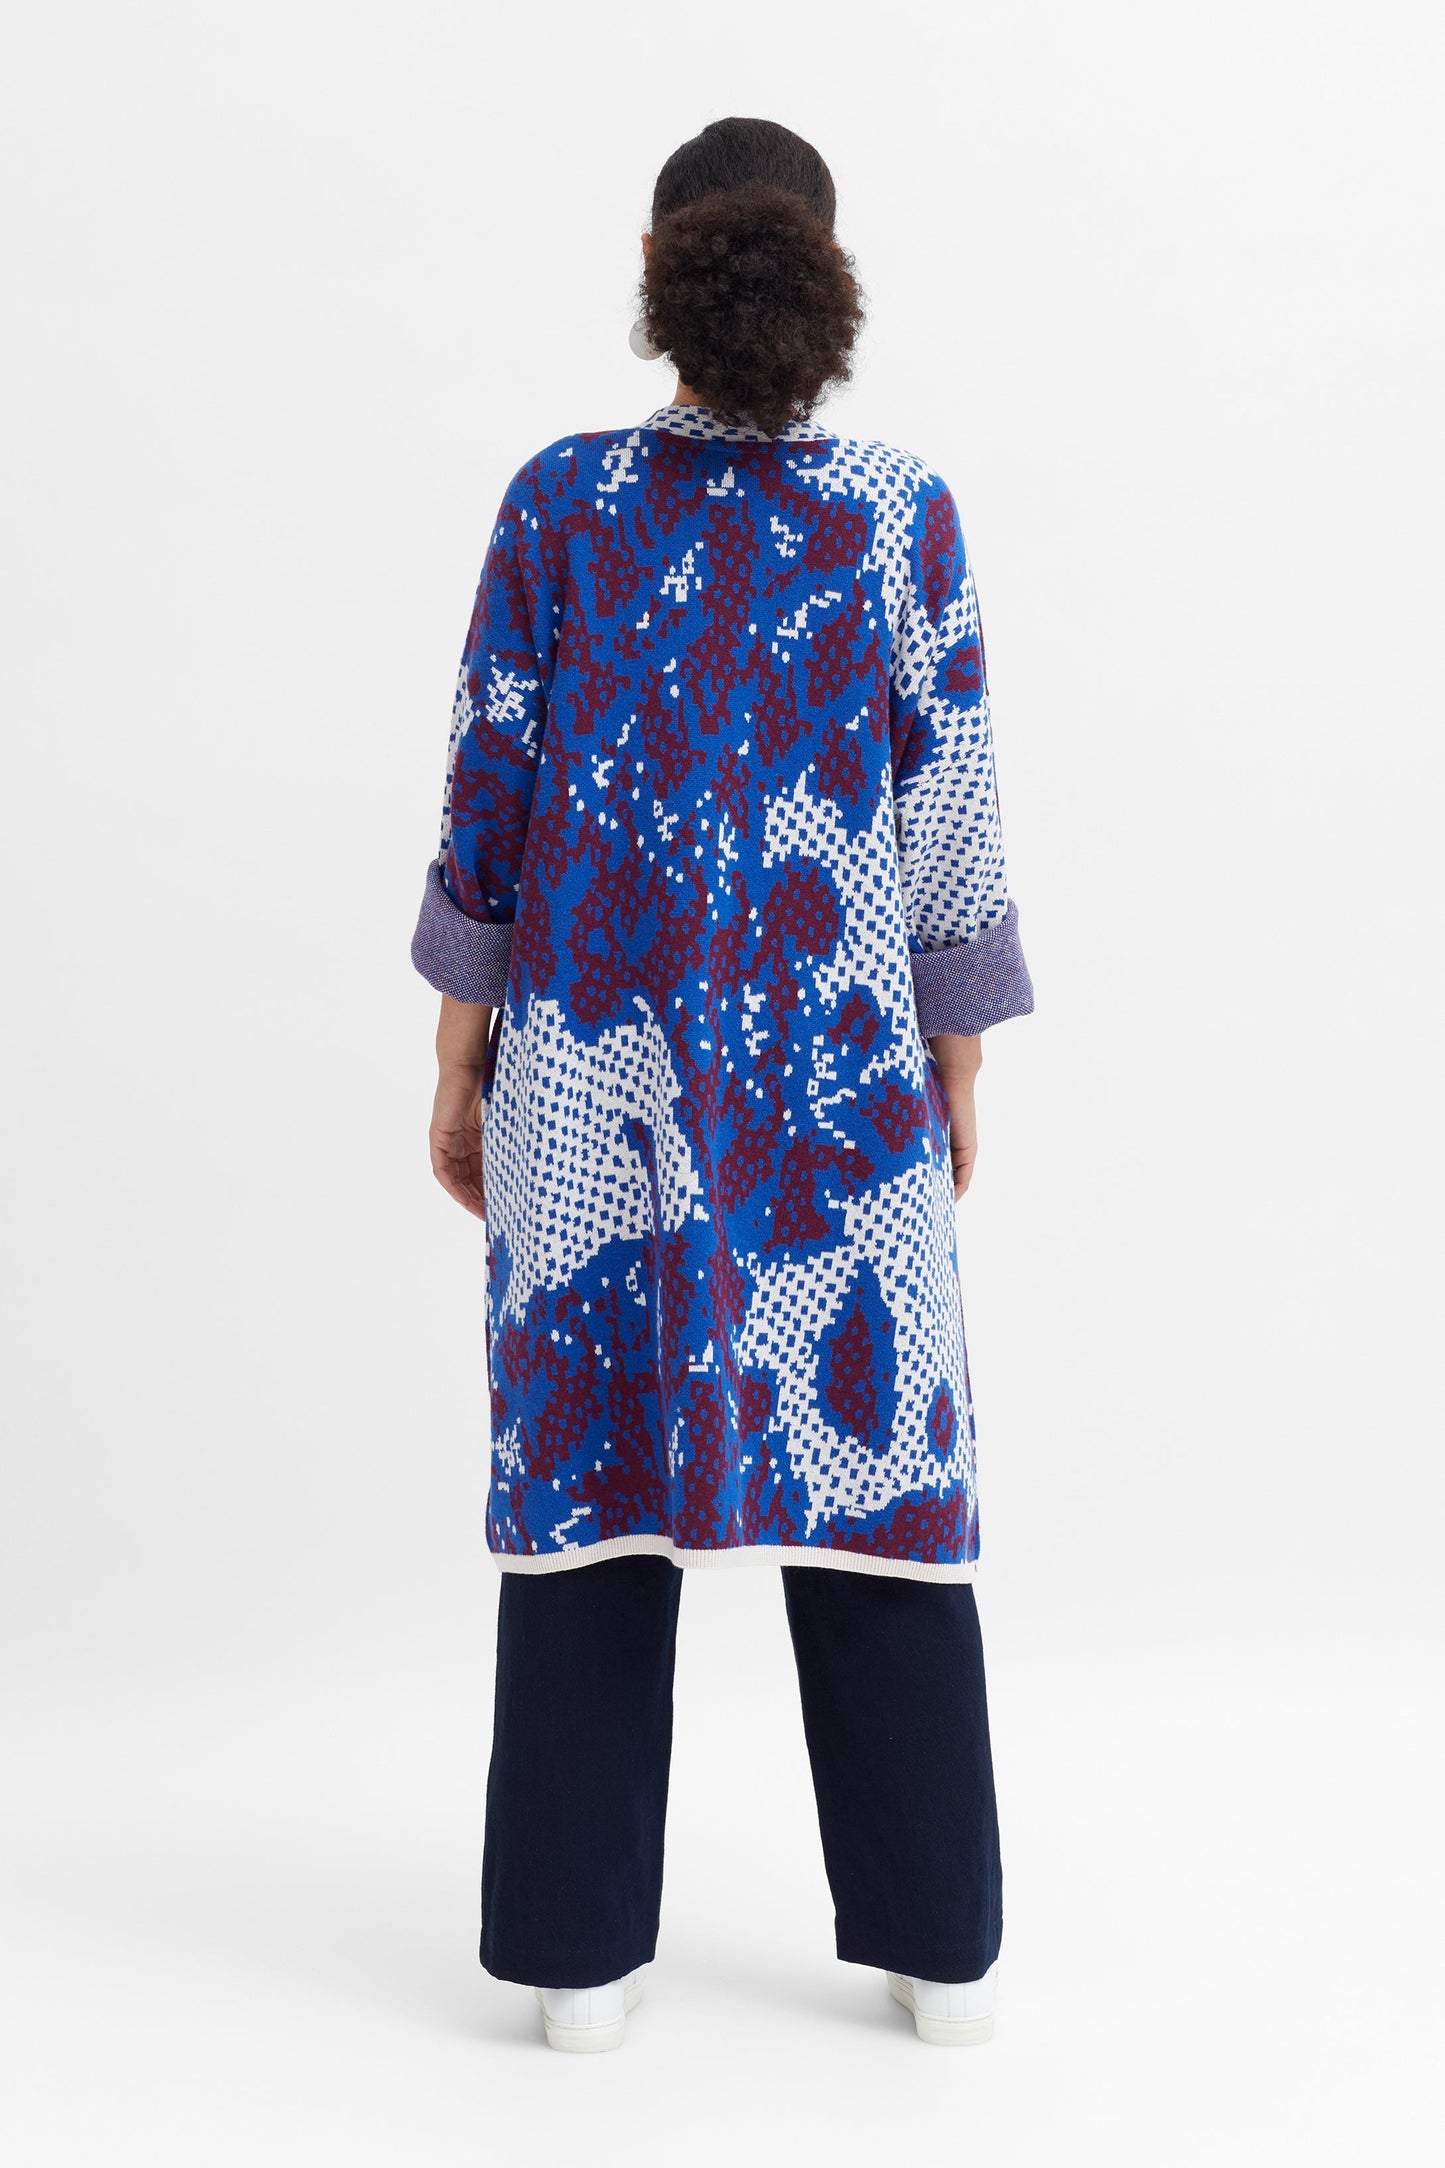 Kers Statement Print Cotton-Wool Mid length Cardigan Model Back Bella | PAPRIKA KERS PRINT